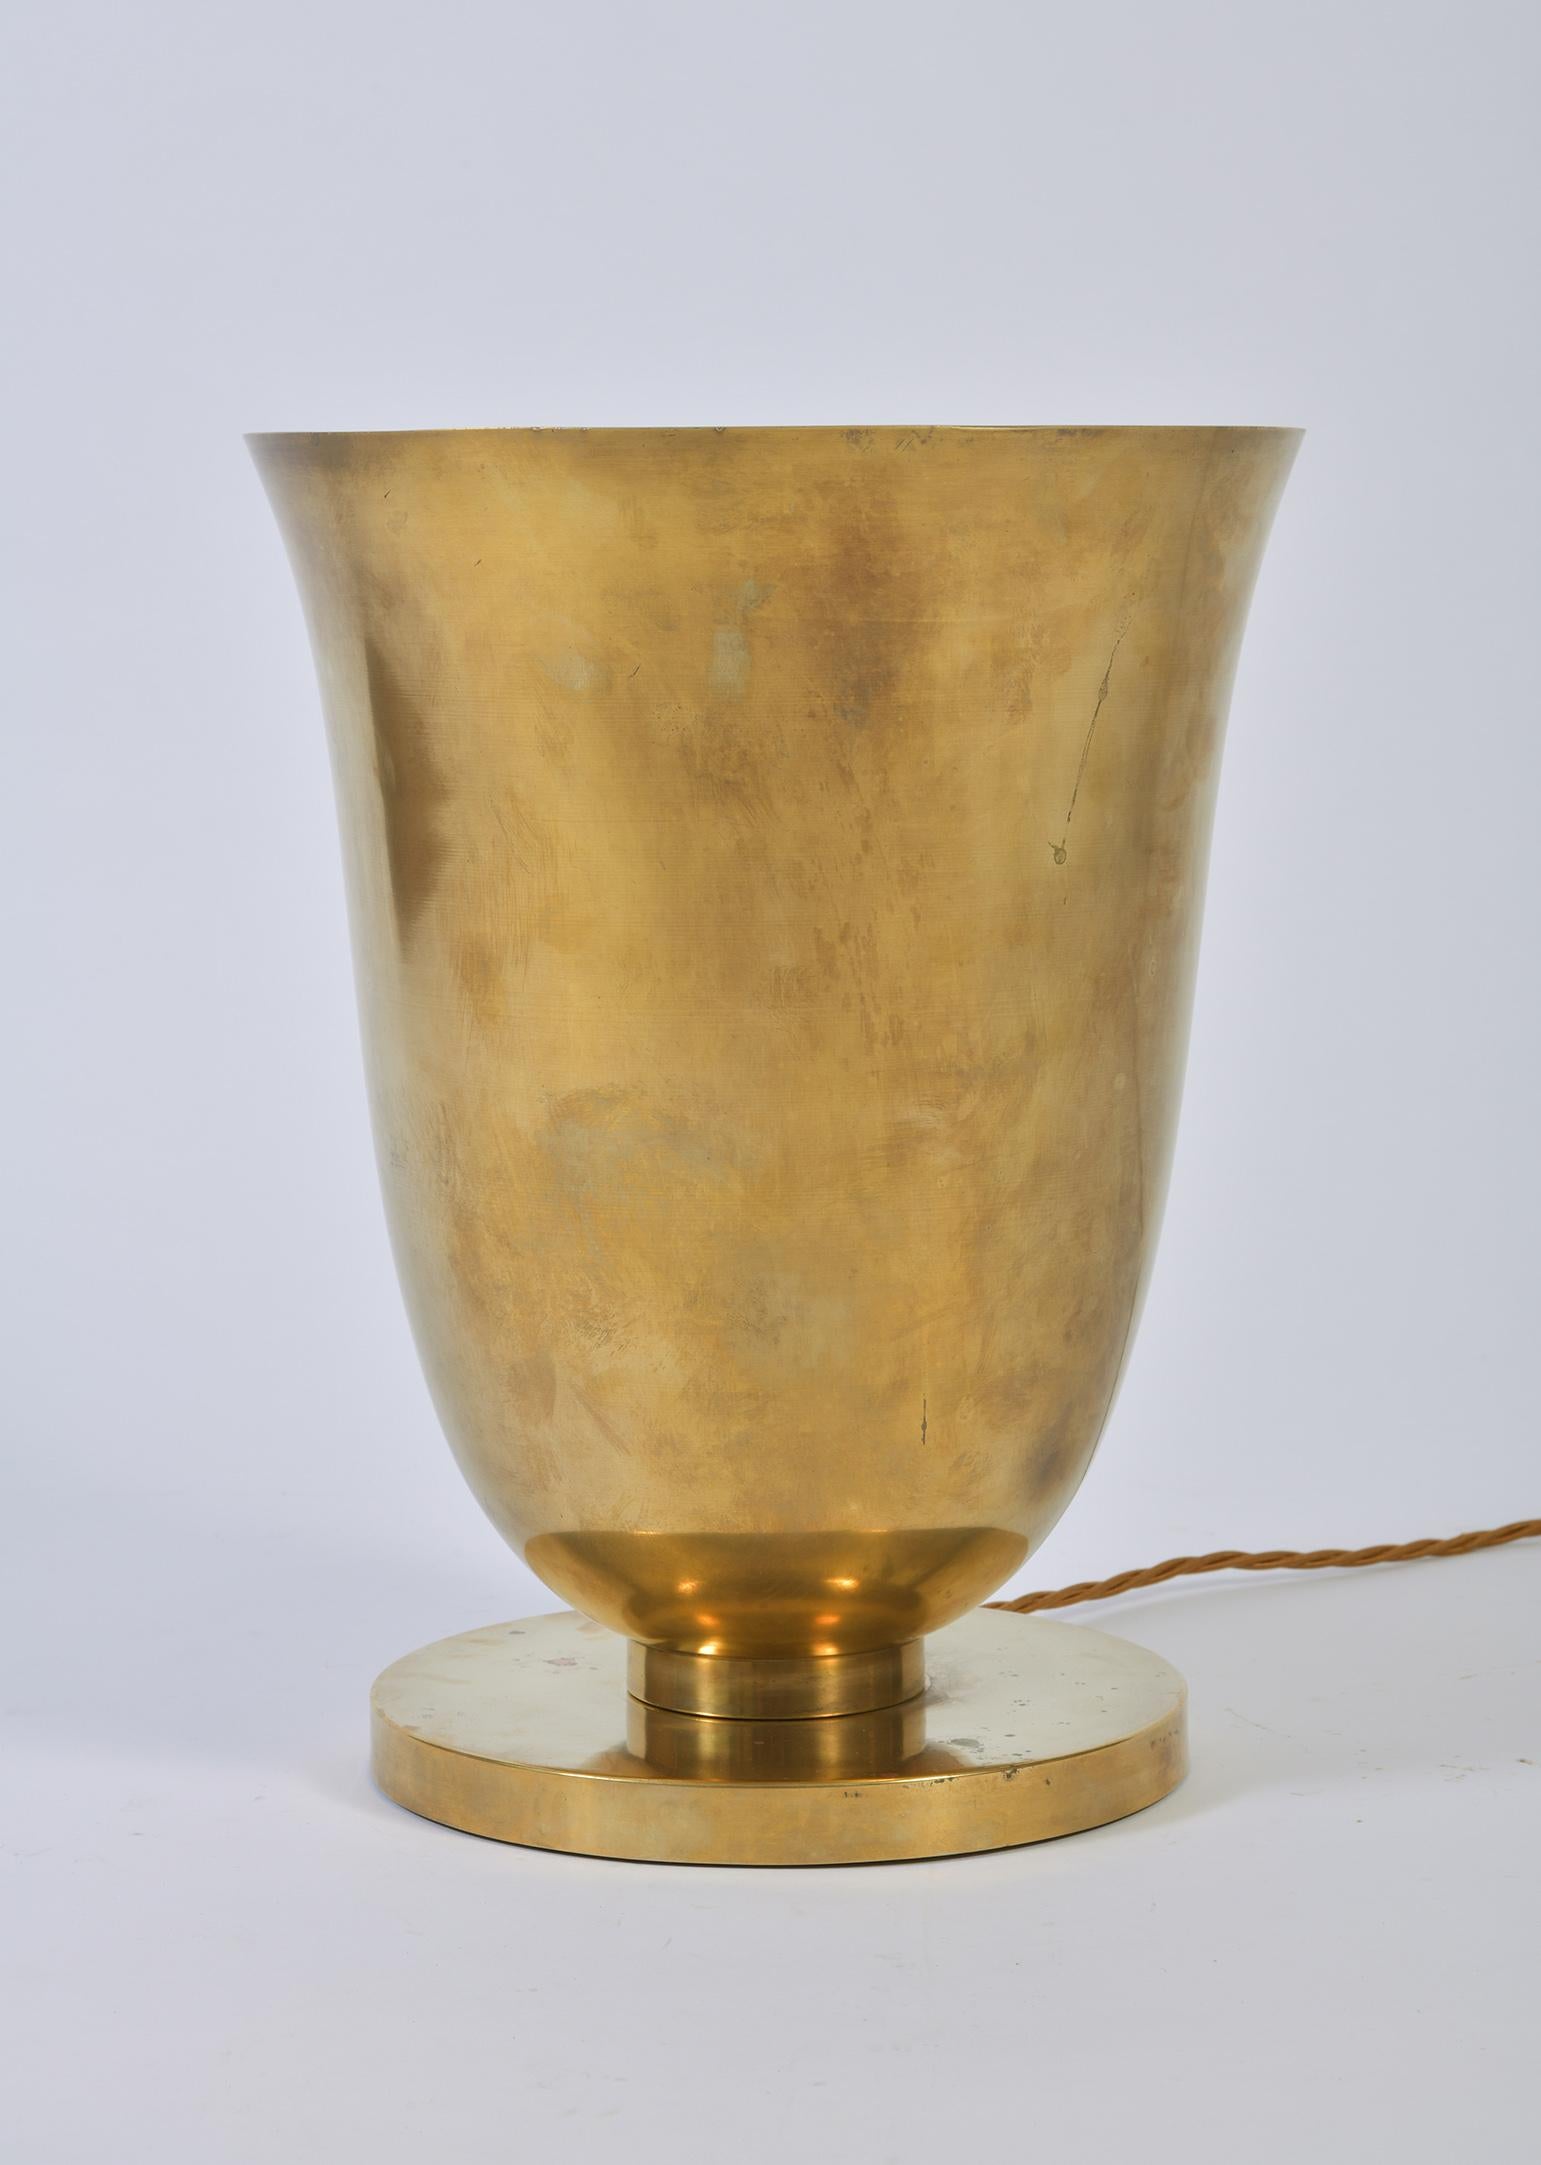 A large brass urn shaped lamp (vasque éclairante)
France, circa 1930.
 